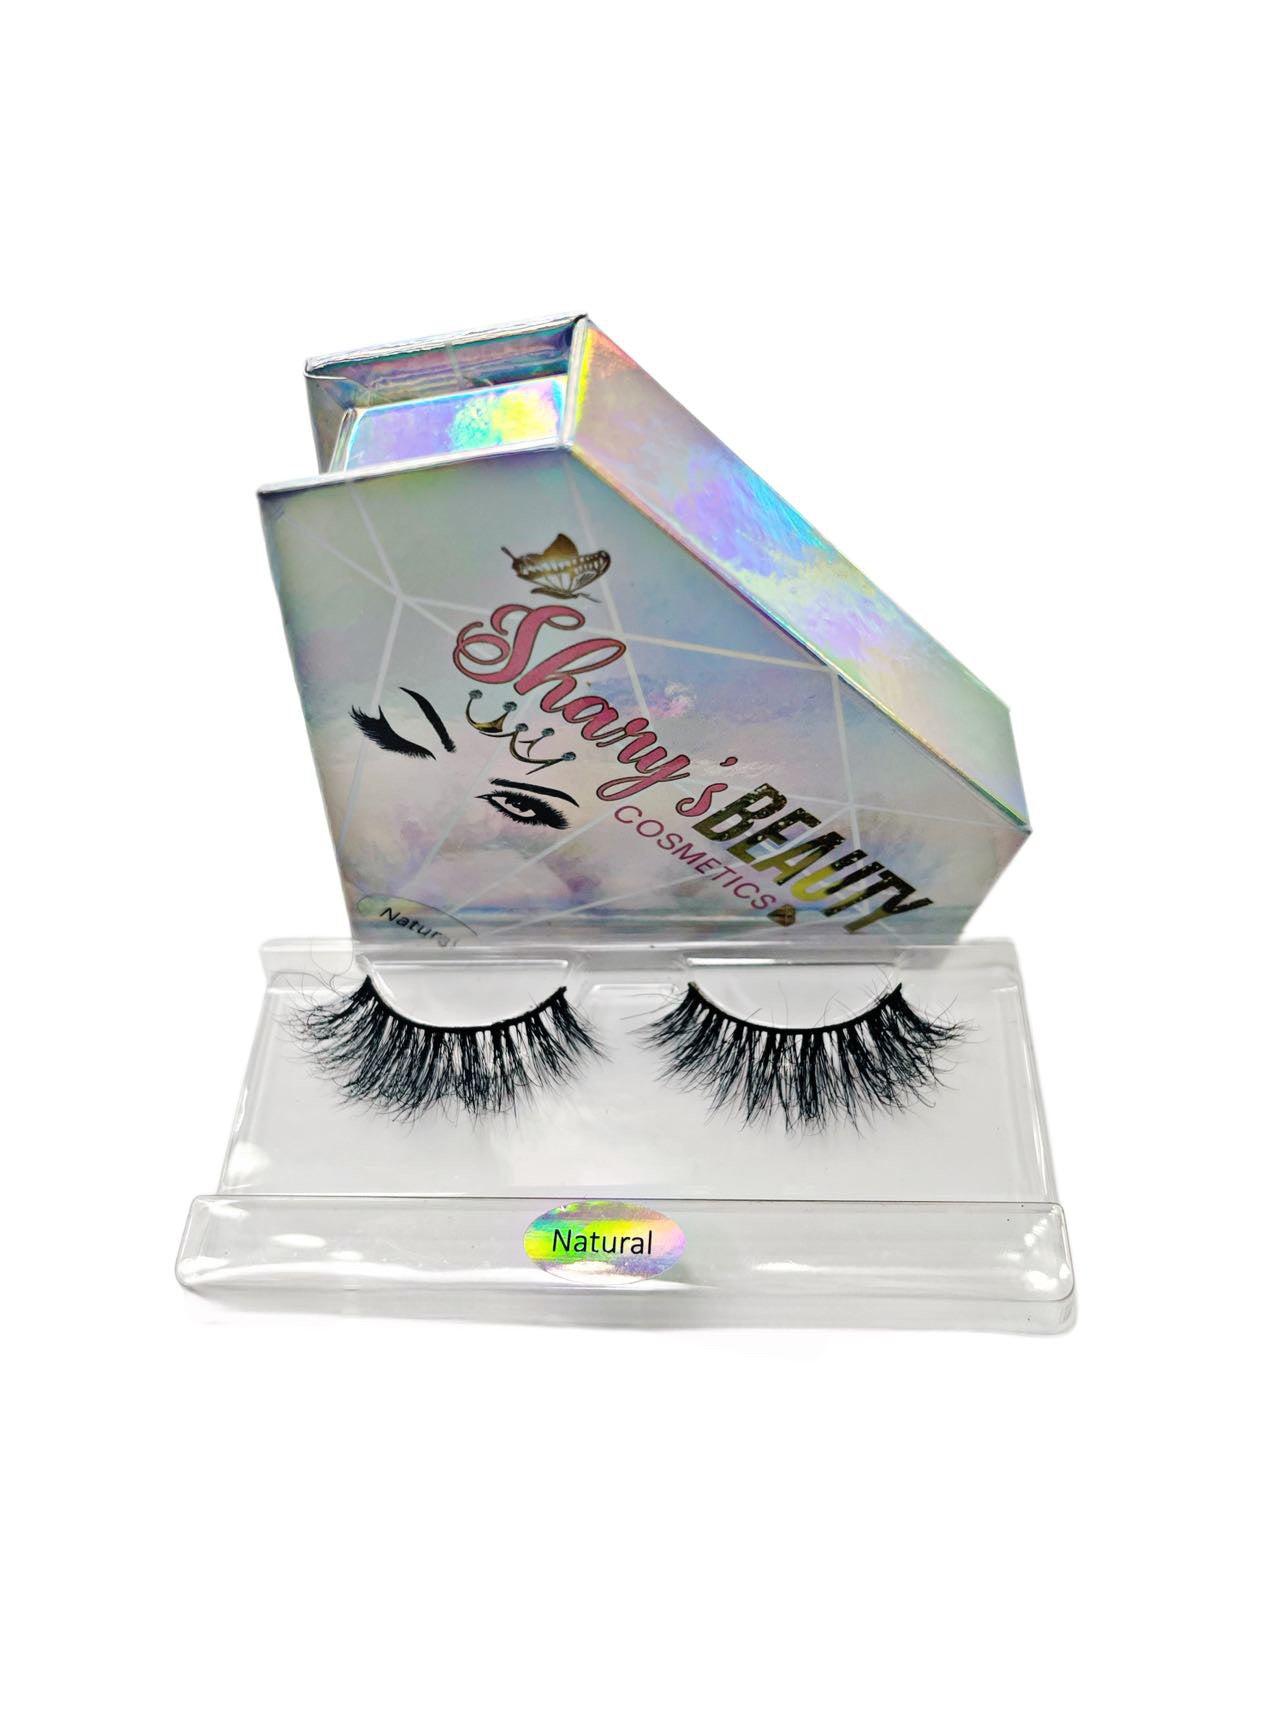 "Natural" Eyelashes New Collection